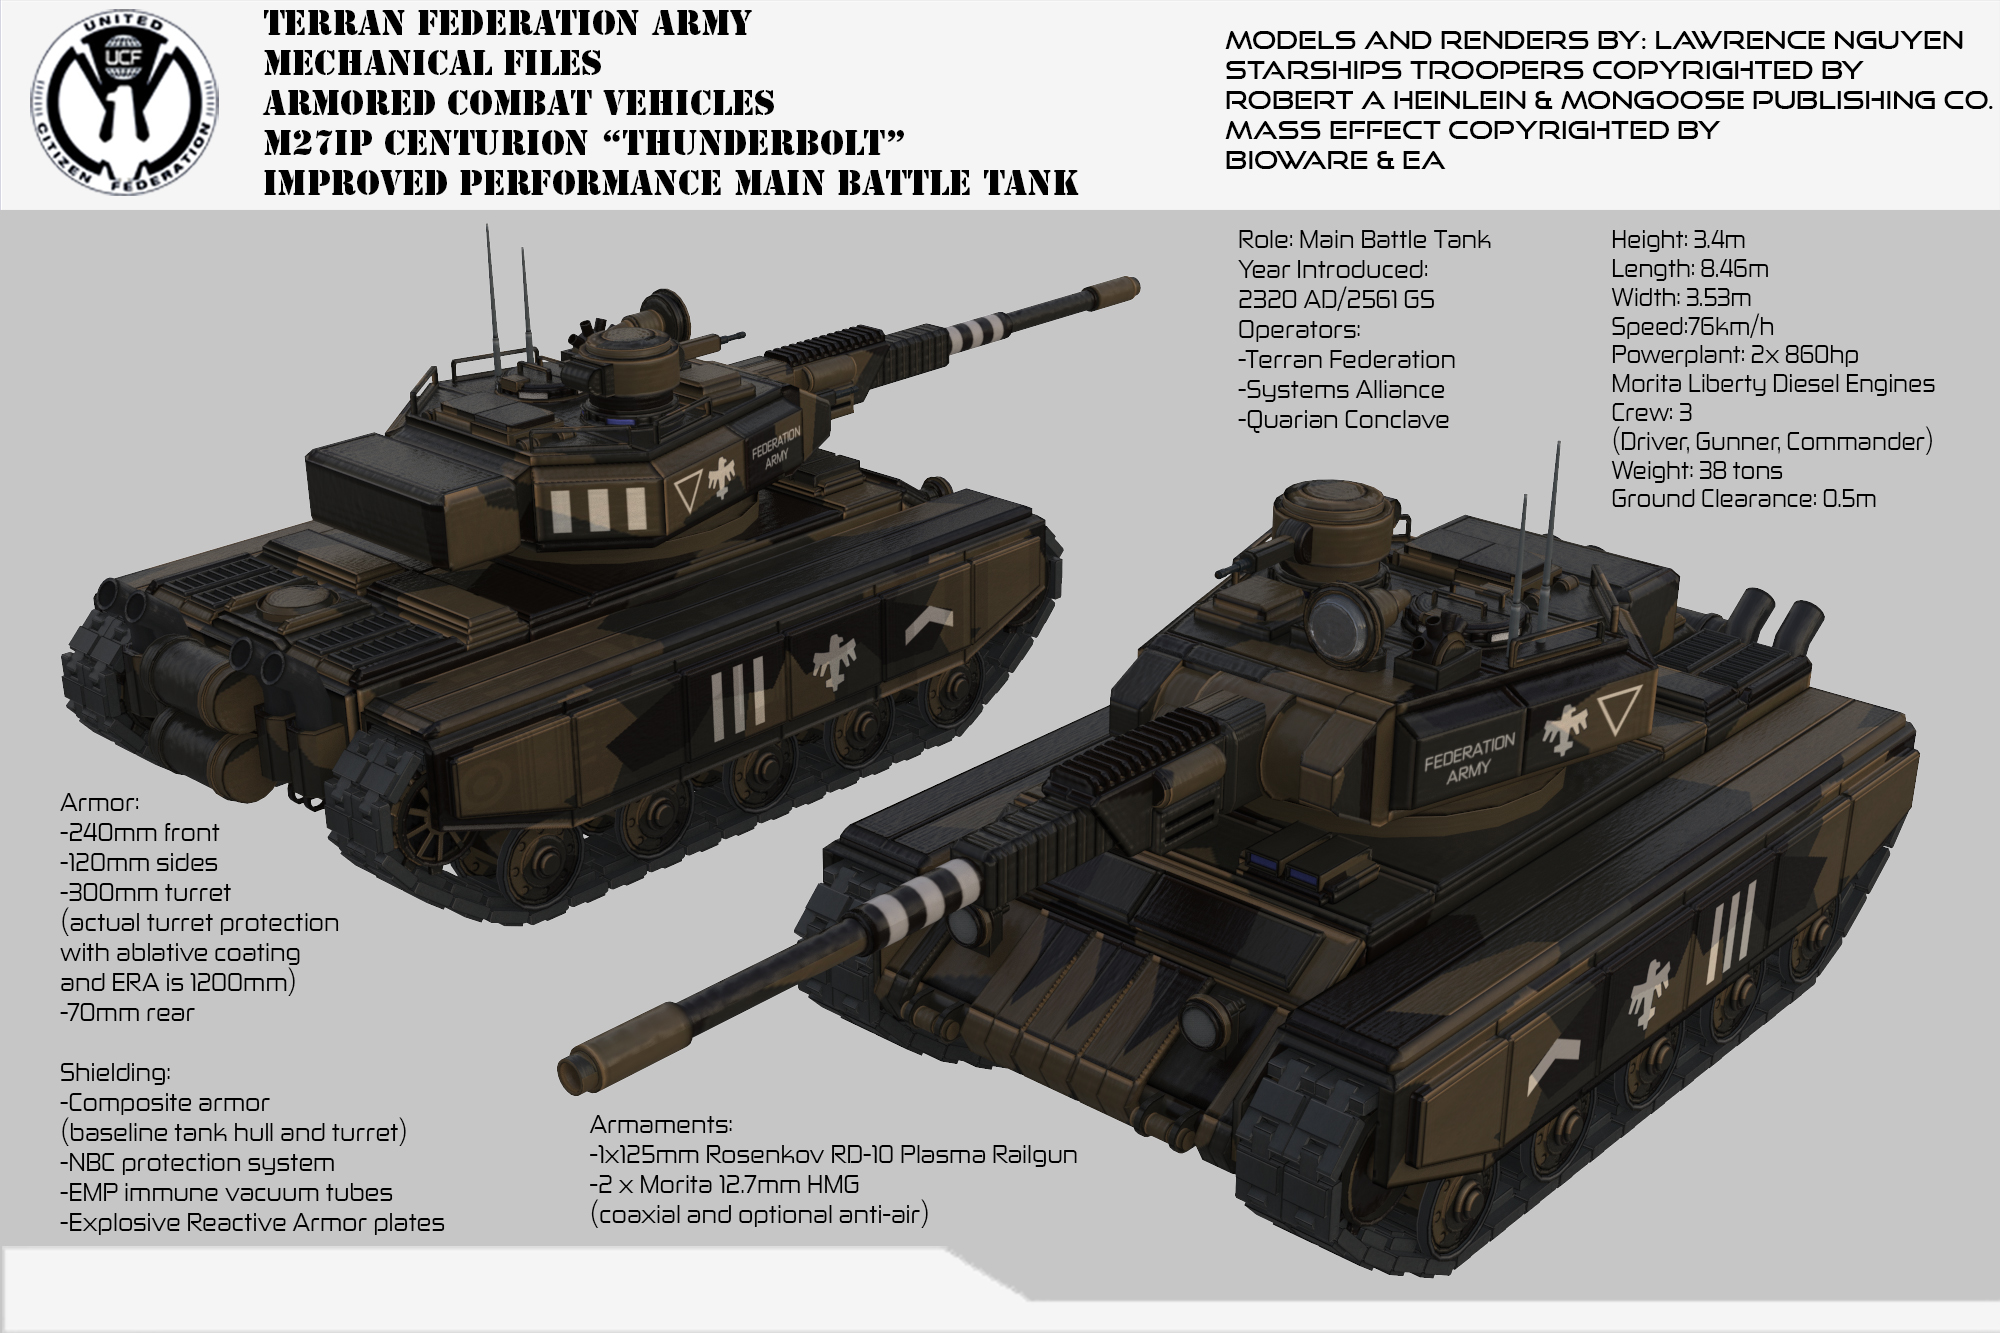 UCF M27IP Centurion II MBT by larrynguyen0096 on DeviantArt